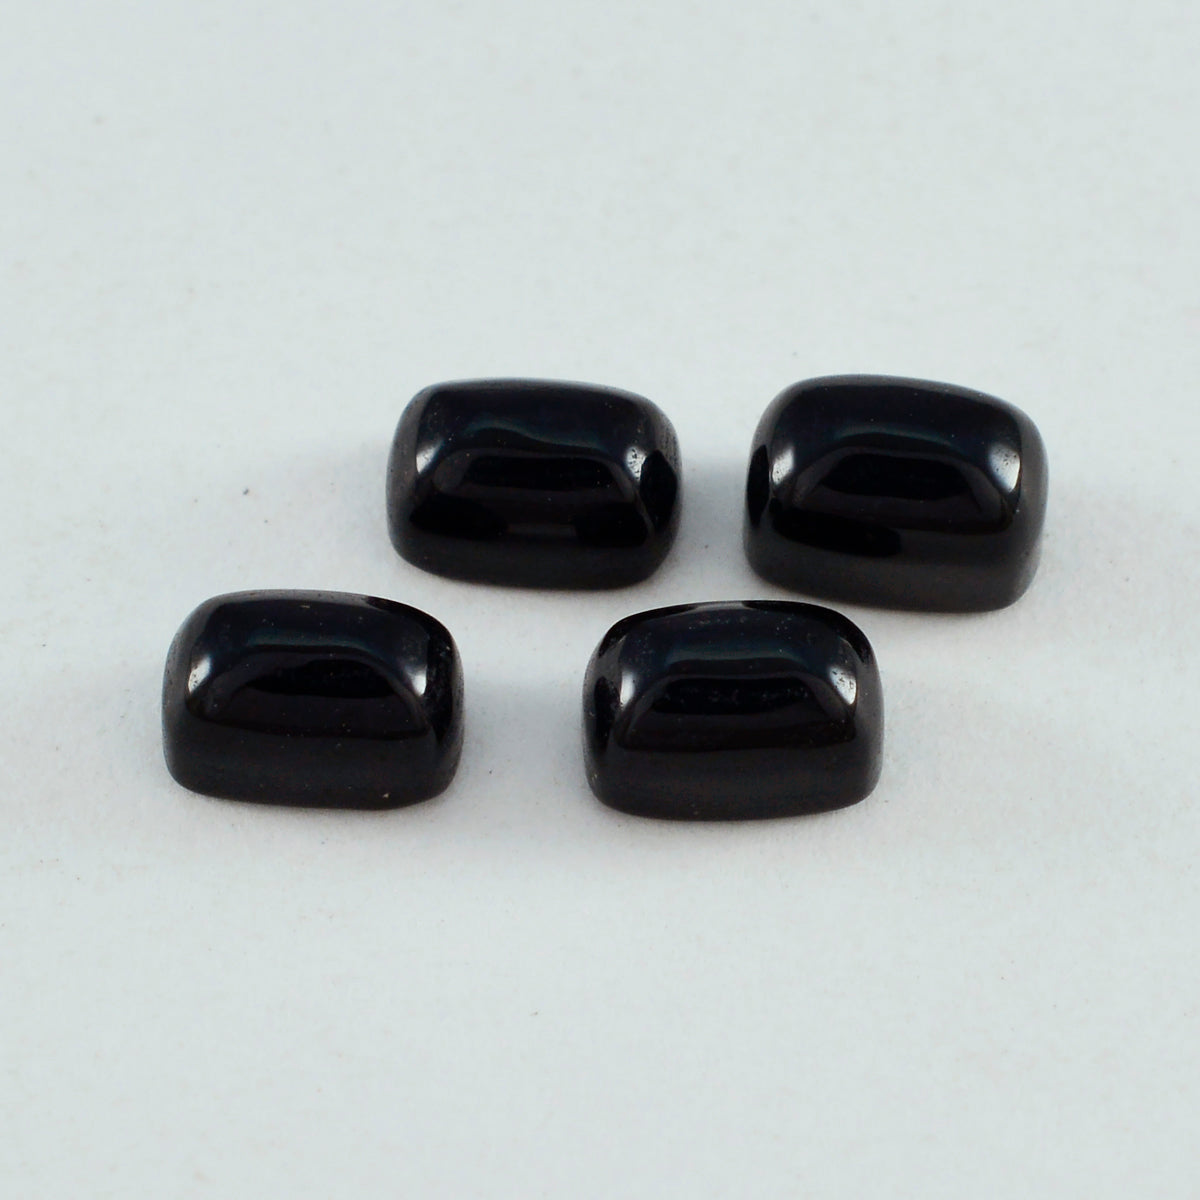 riyogems 1pc ブラック オニキス カボション 6x8 mm 八角形の見栄えの良い品質のルース宝石